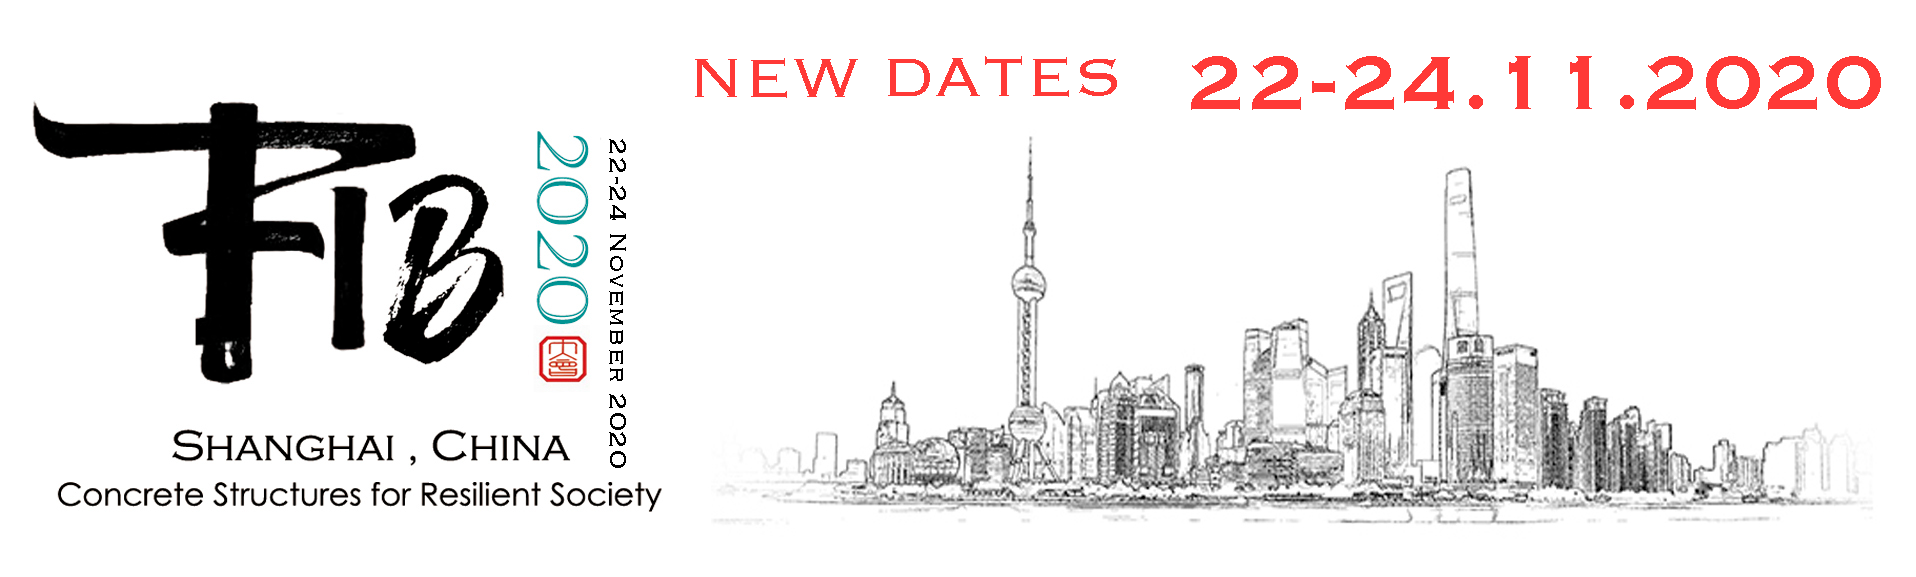 2002 slideshow accueil Shanghai newdates